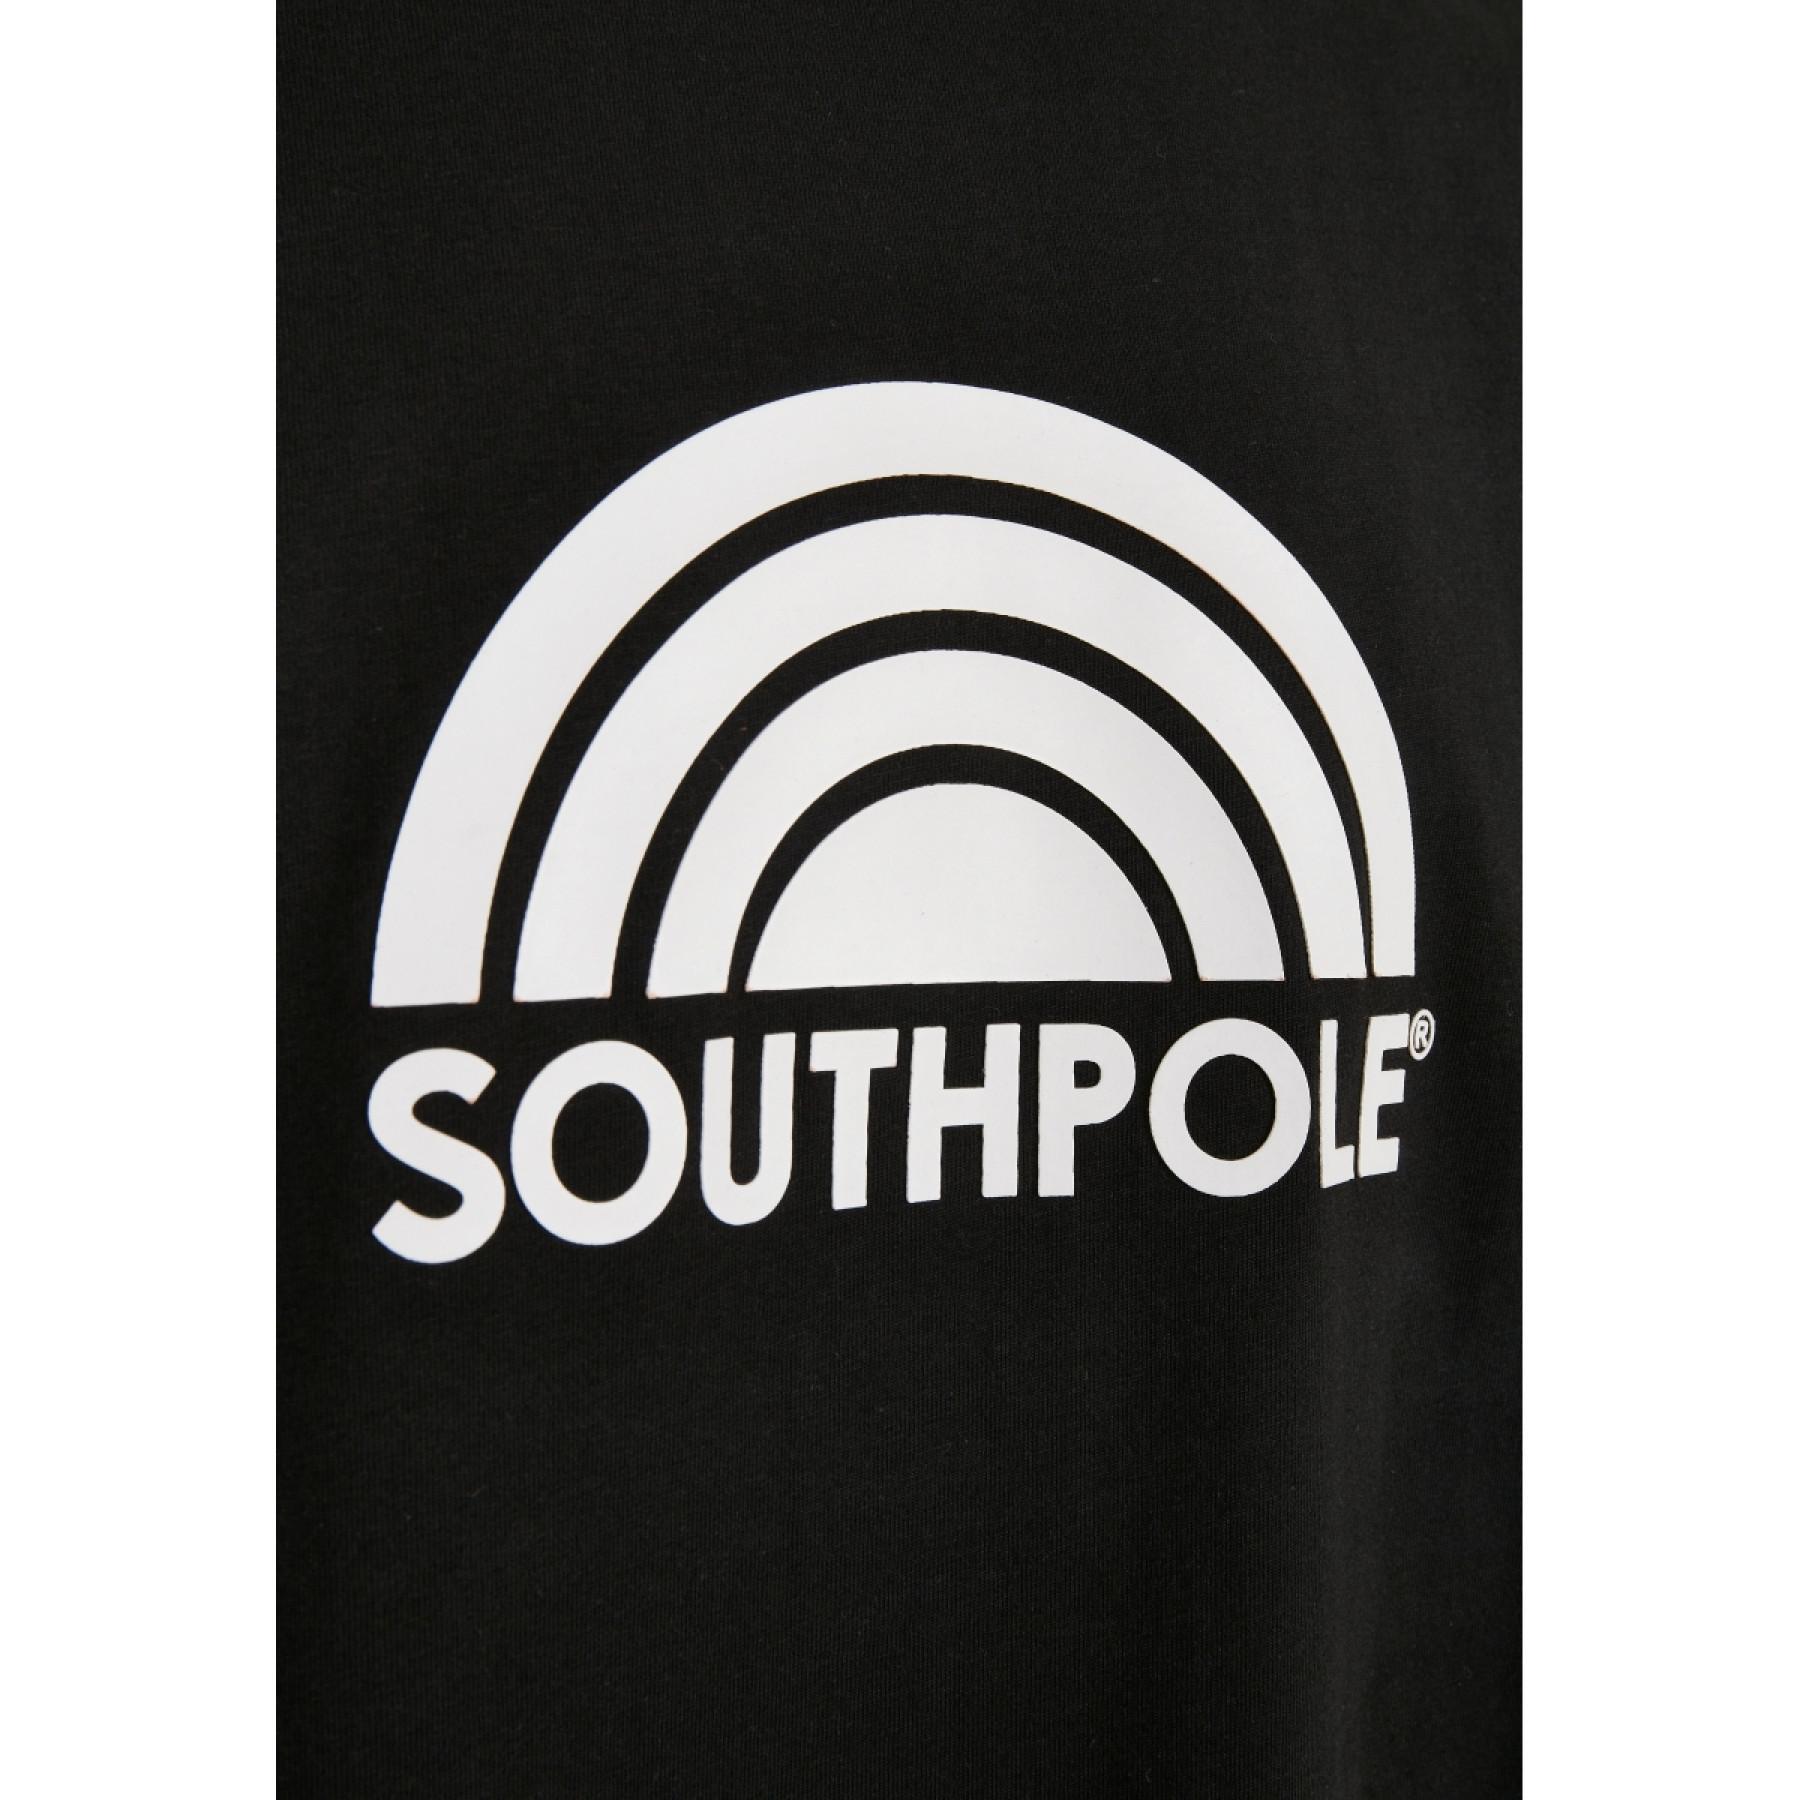 Koszulka Southpole logo